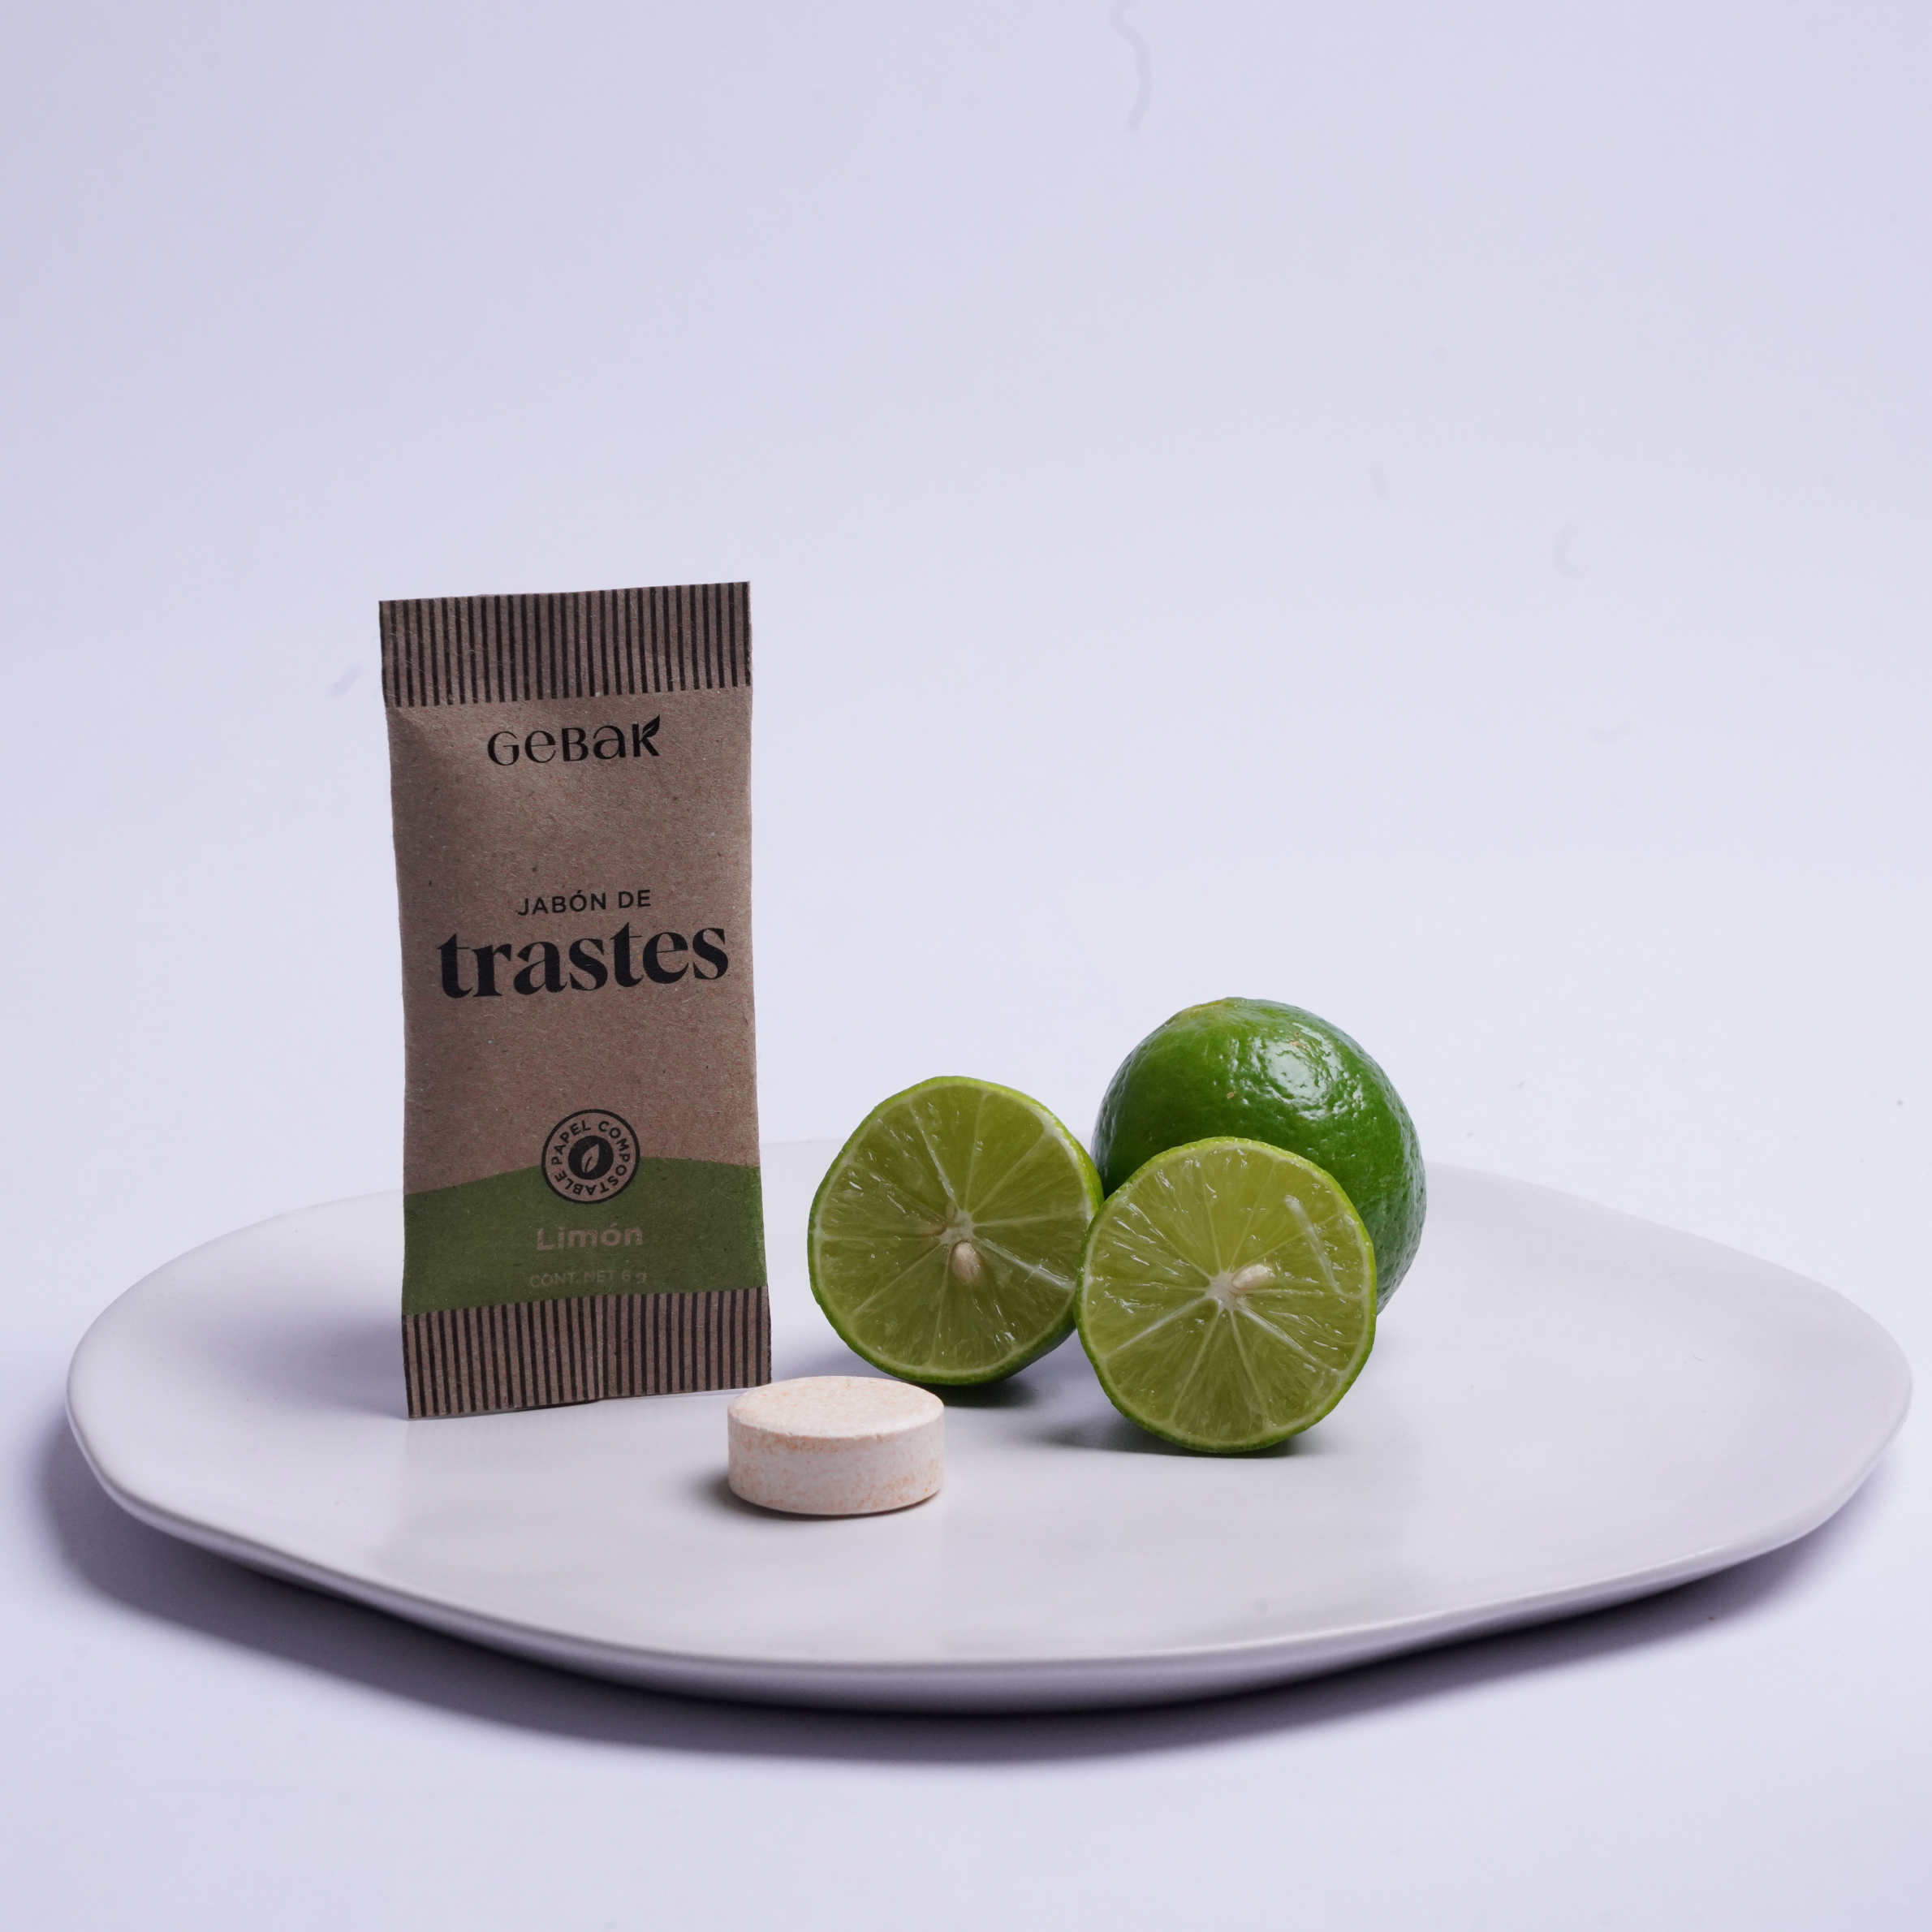 Kit Trastes | GRATIS Botella + Jabón de Trastes Ecológico - Rinde 3 Litros